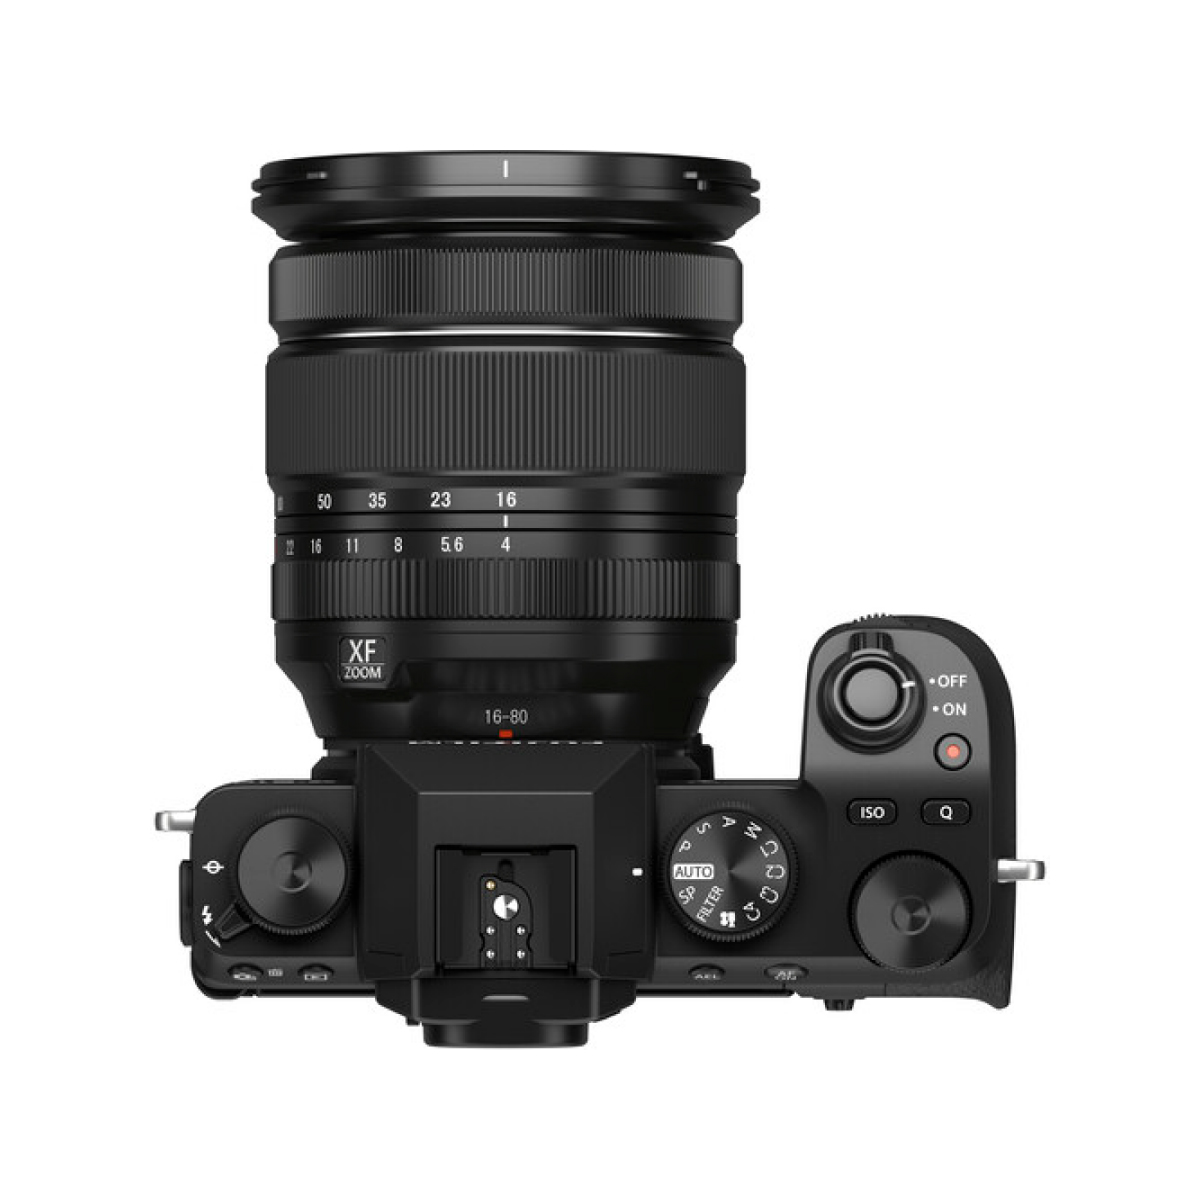 Fujifilm X-S10 Mirrorless Camera Body with XF16-80mm Lens – Black (4)